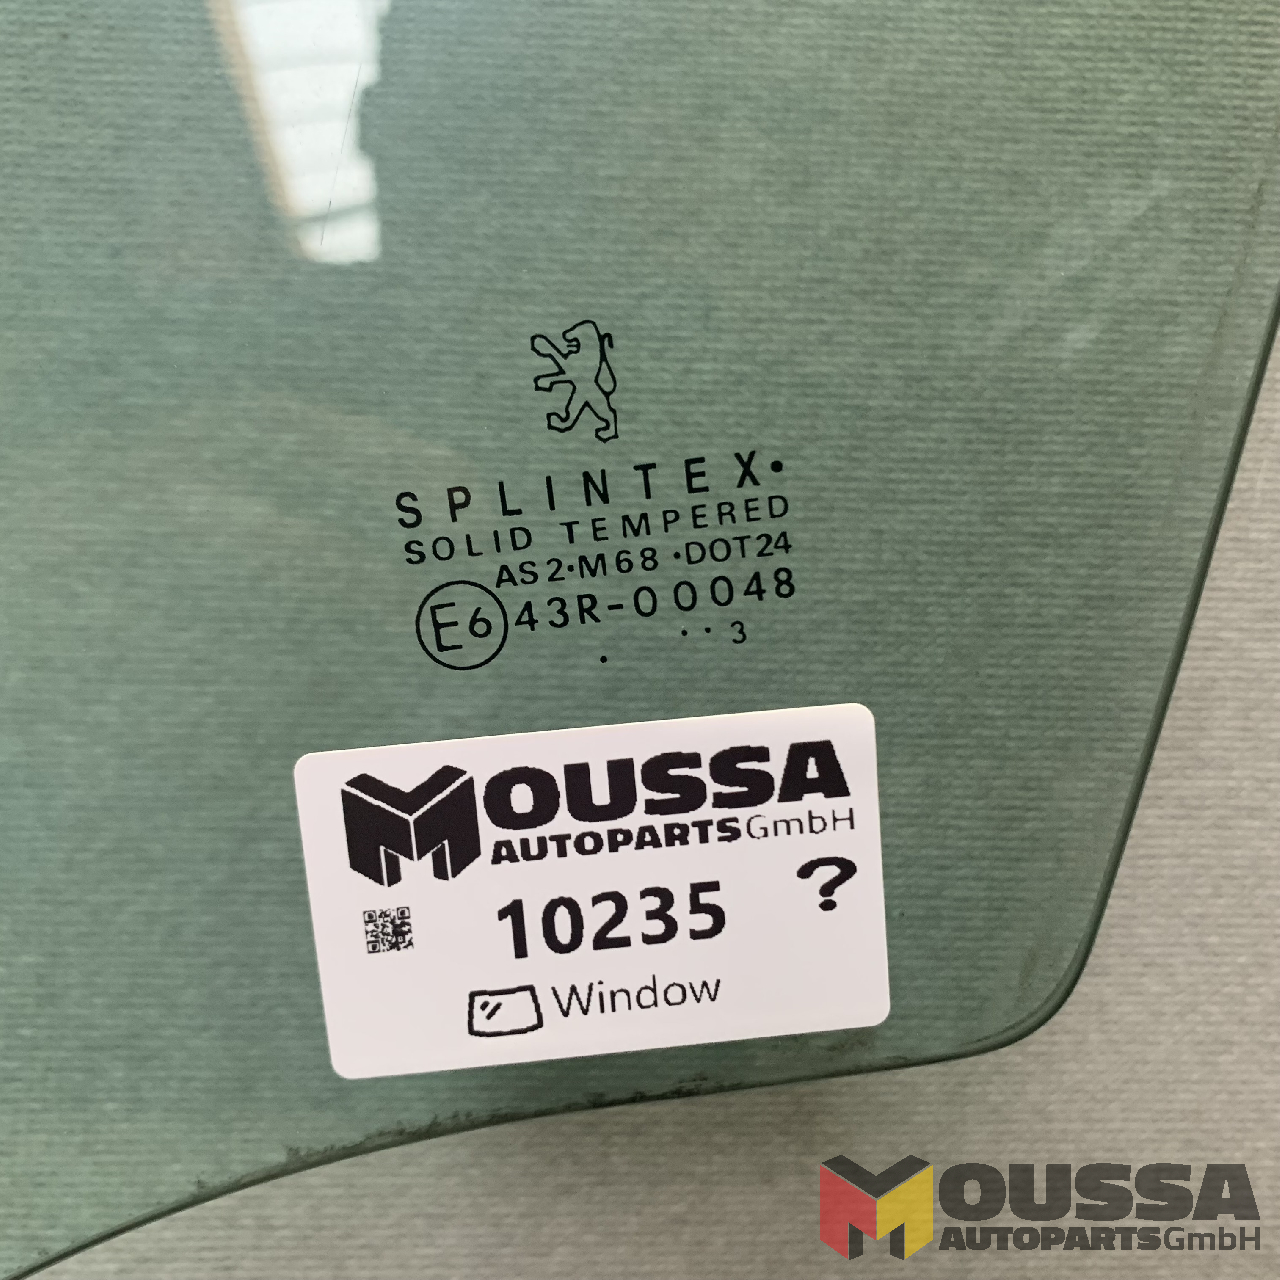 MOUSSA-AUTOPARTS-64921c2b2b334.jpg